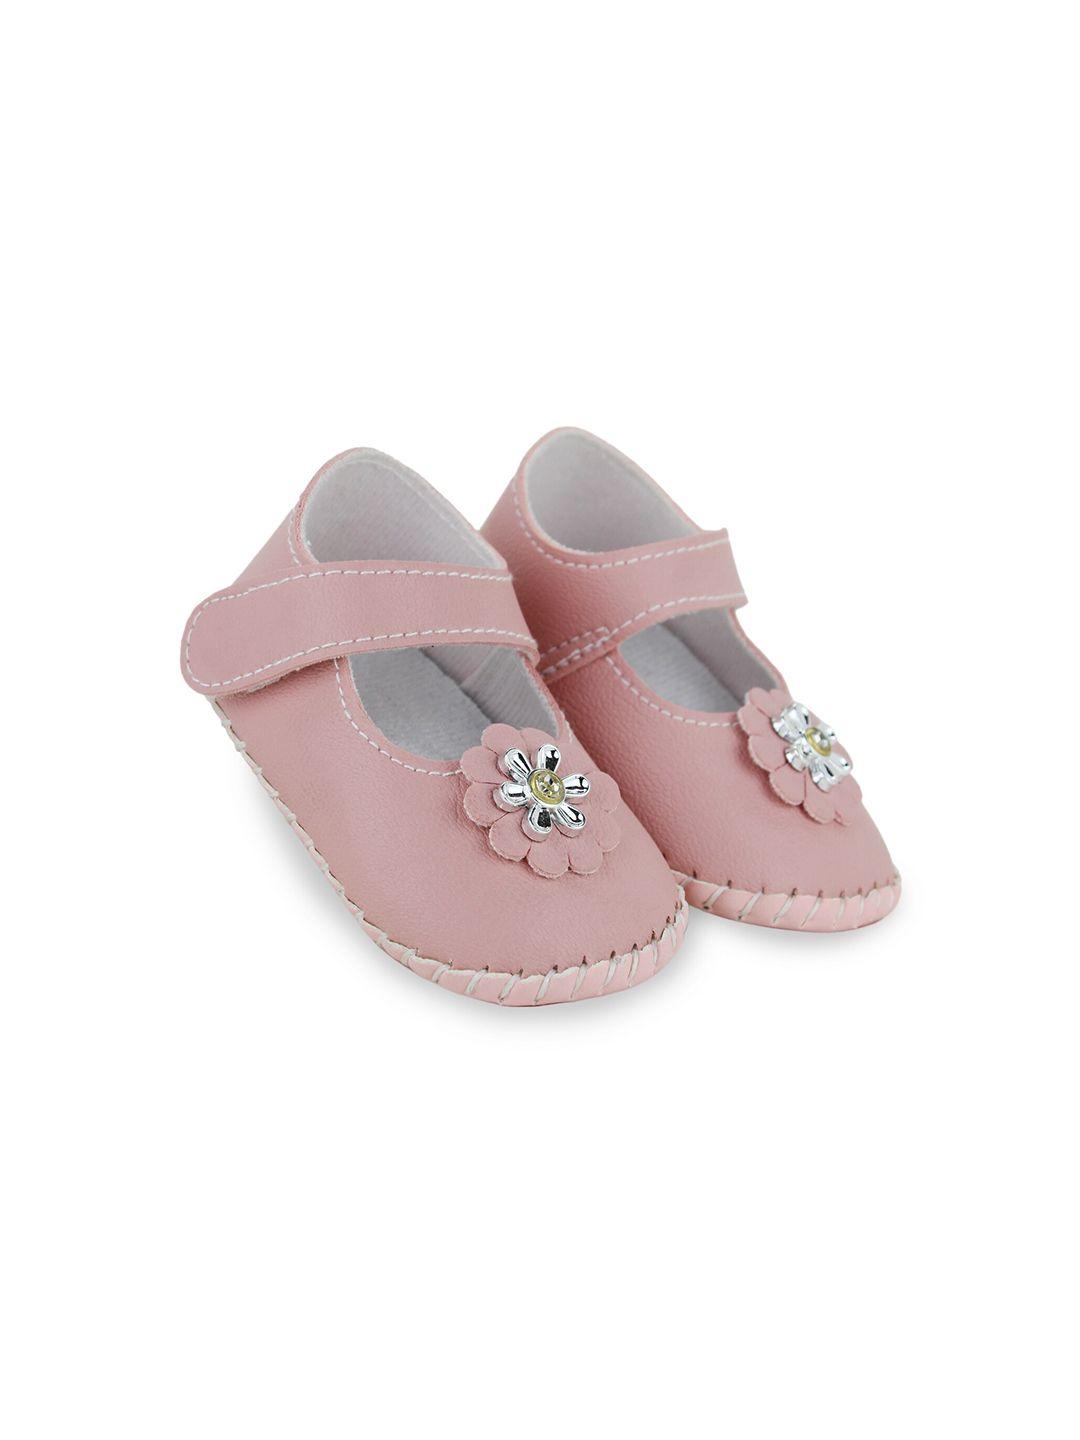 baesd infant girls sandal booties